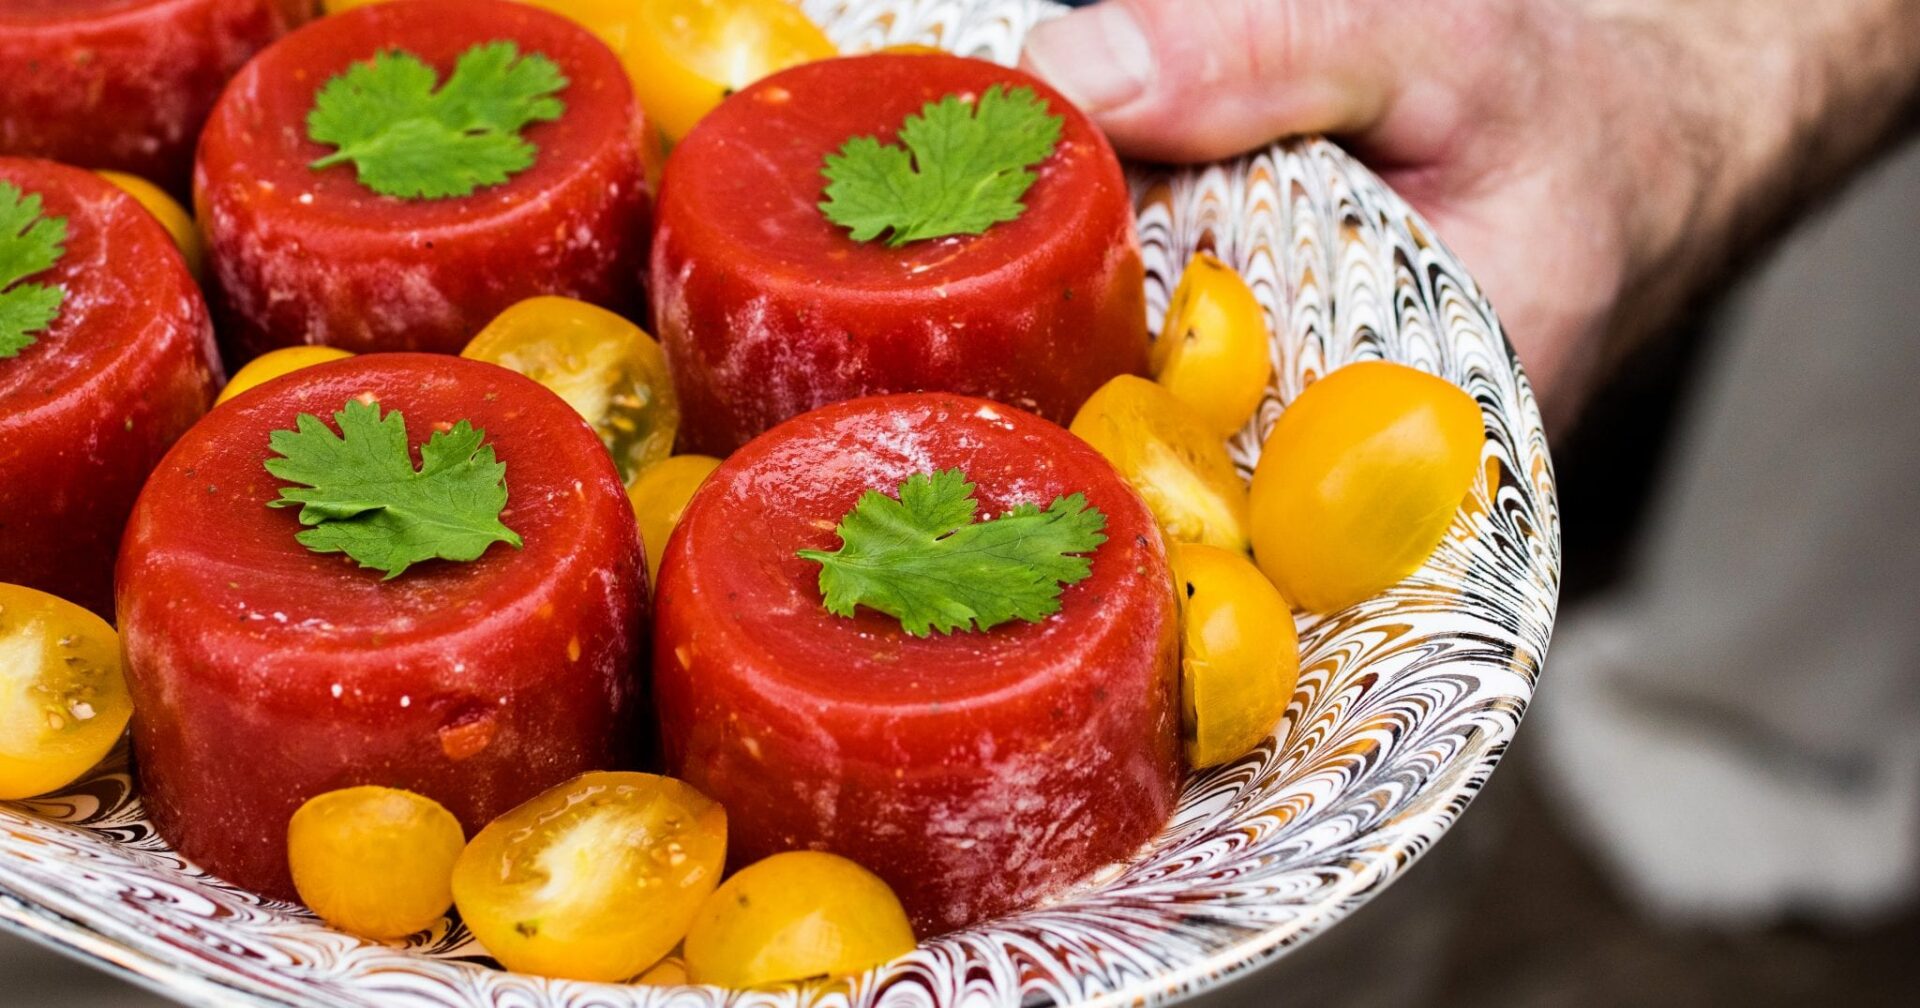 Most popular recipes in April include the Tomato Aspic